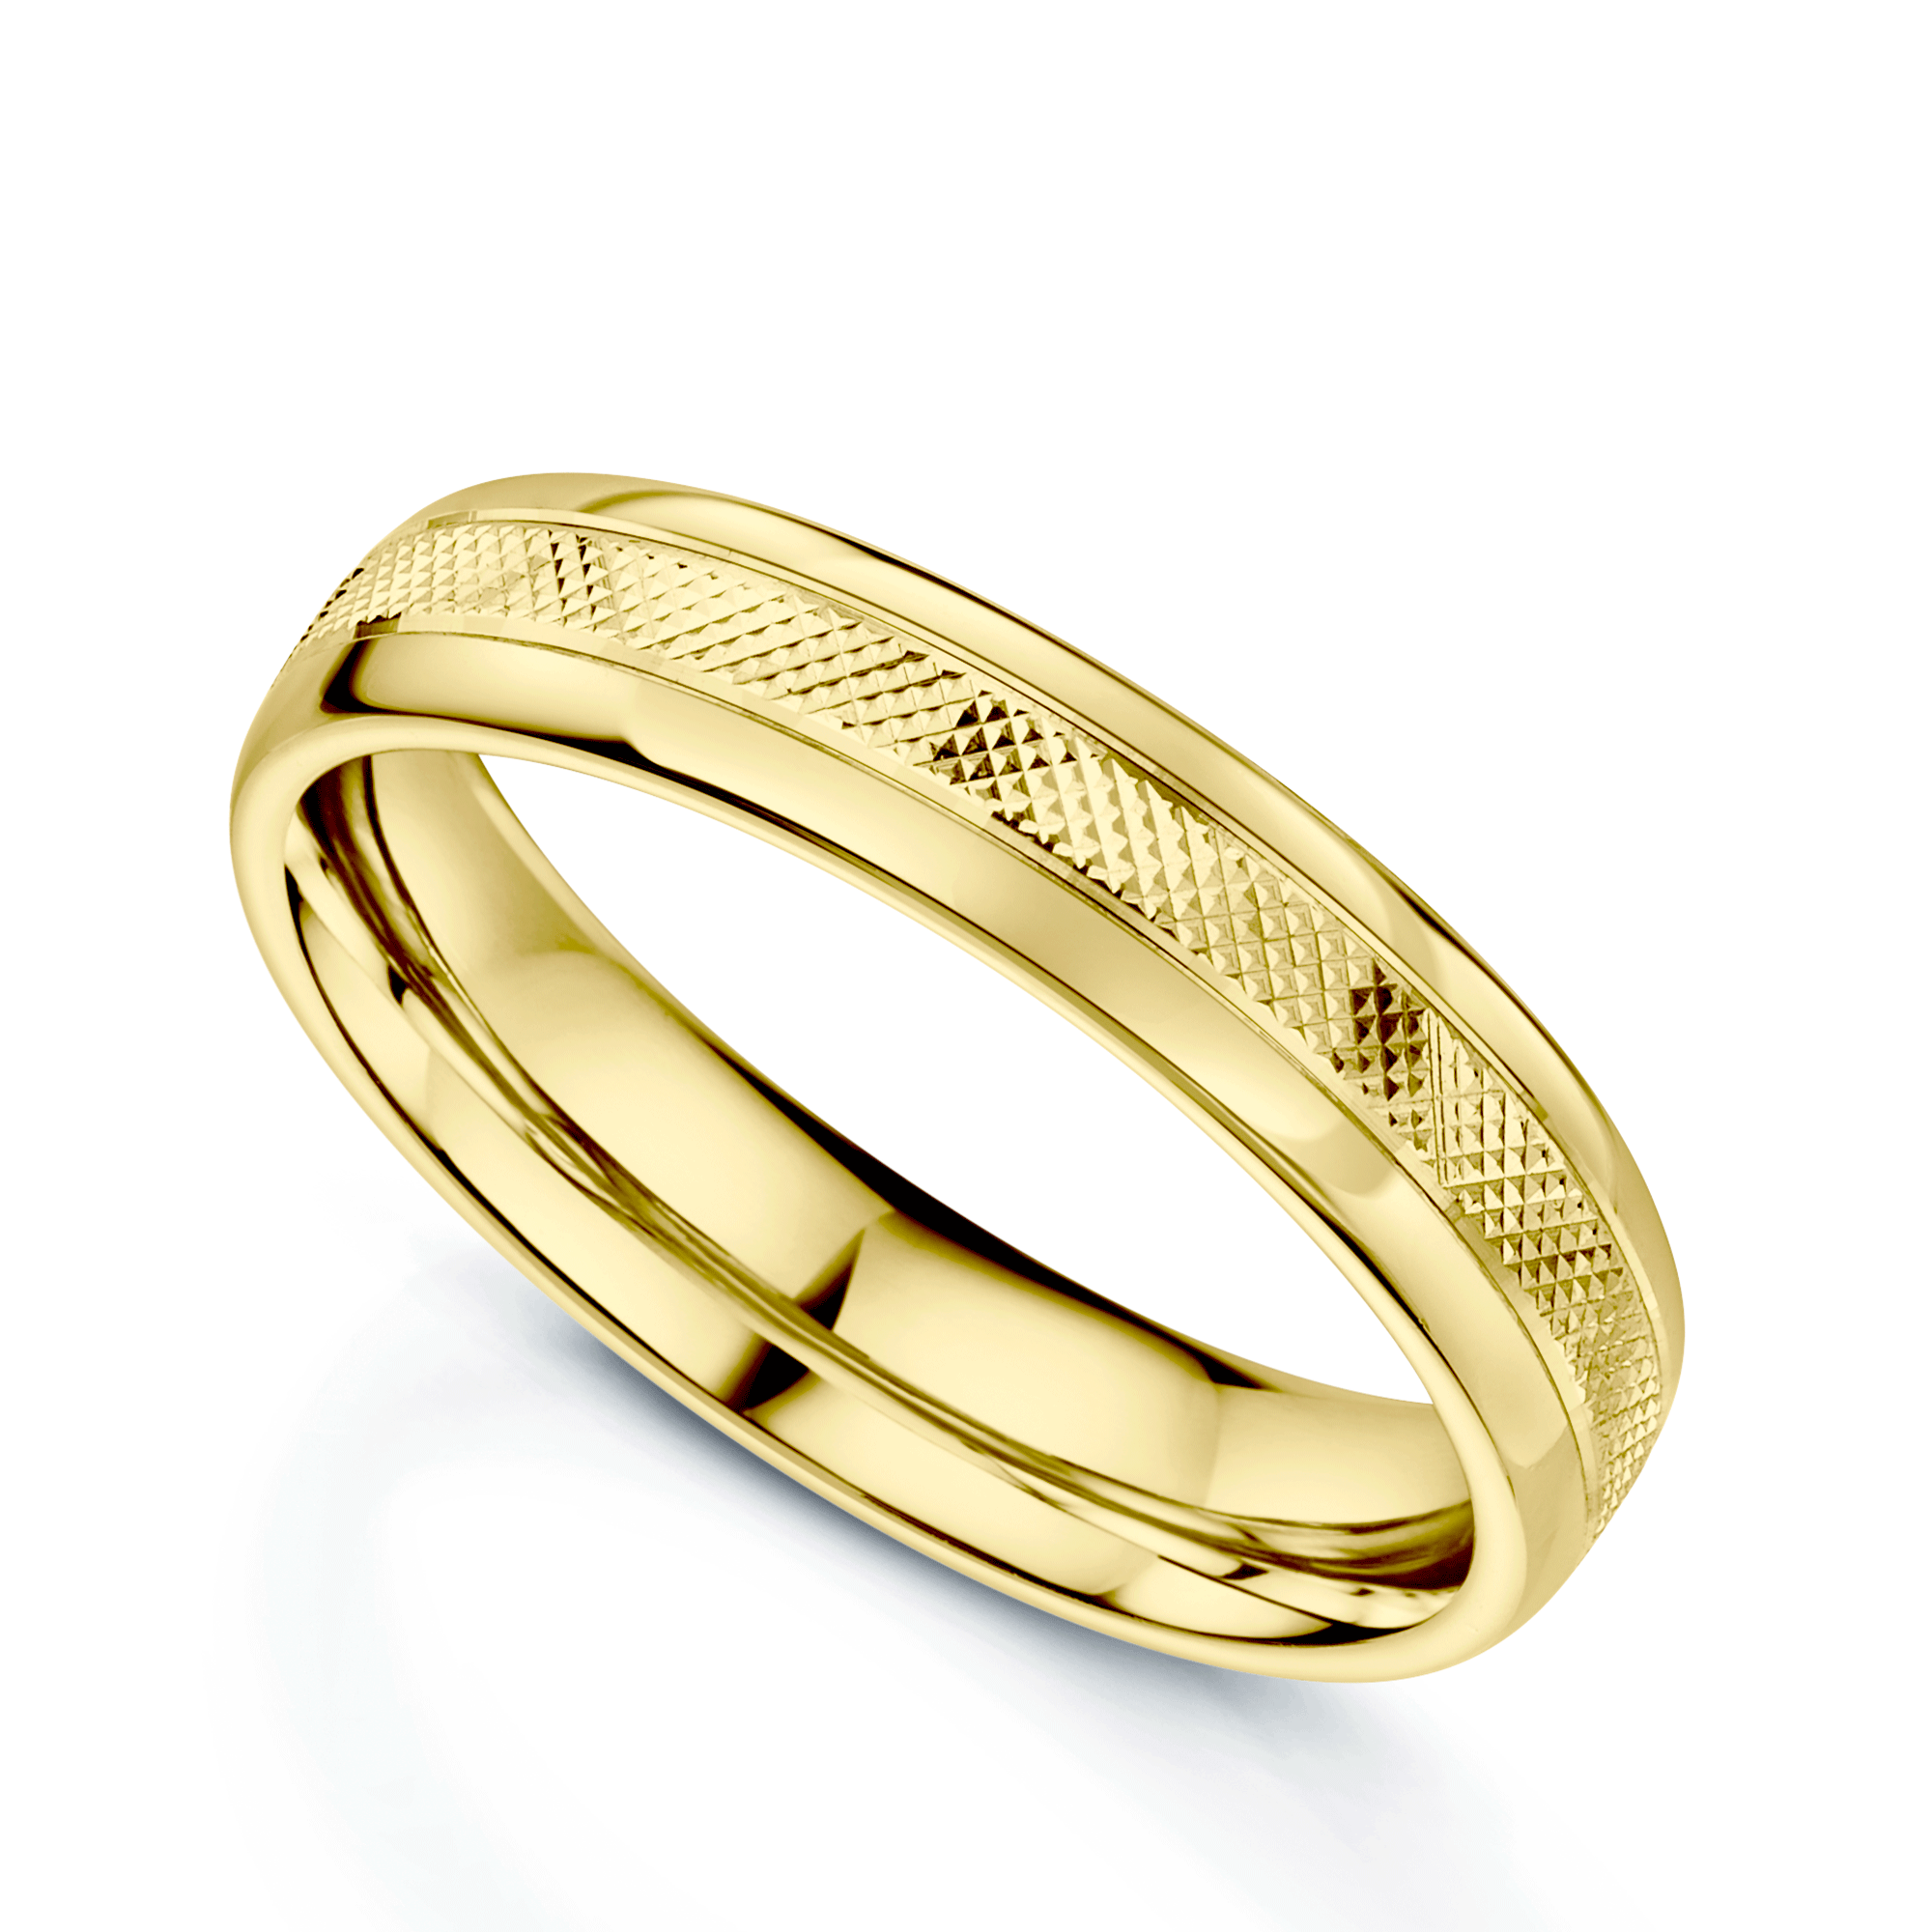 18ct Yellow Gold Criss-Cross Patterned Polished Flat Court Shape Wedding Ring